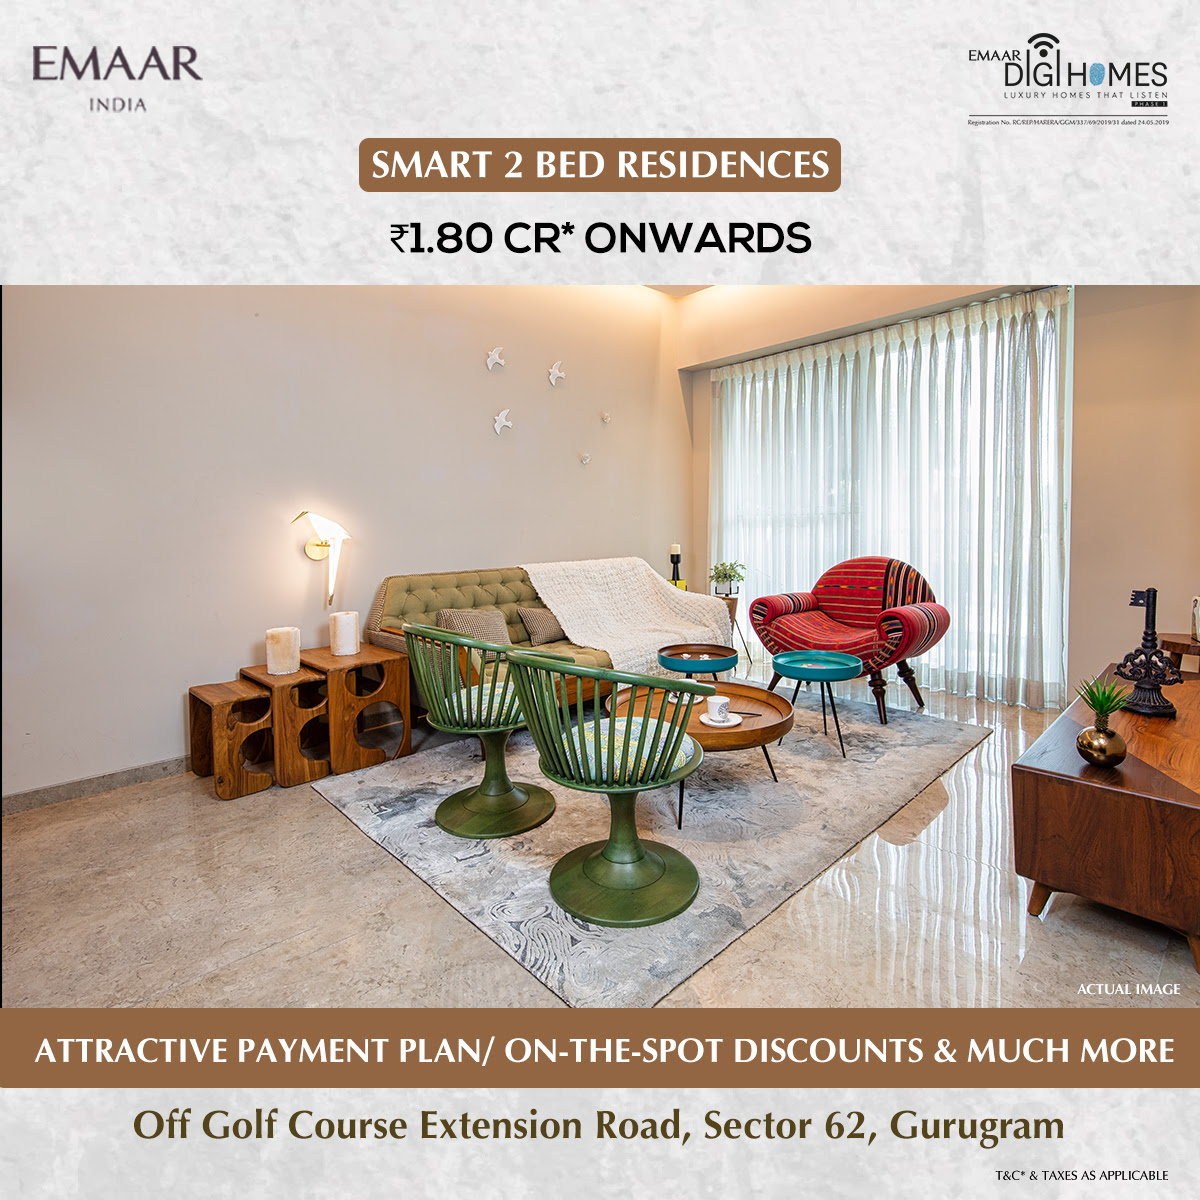 Emaar Digi Homes Presenting 2 Bed residence Rs 1.80 Cr onwards, Gurgaon